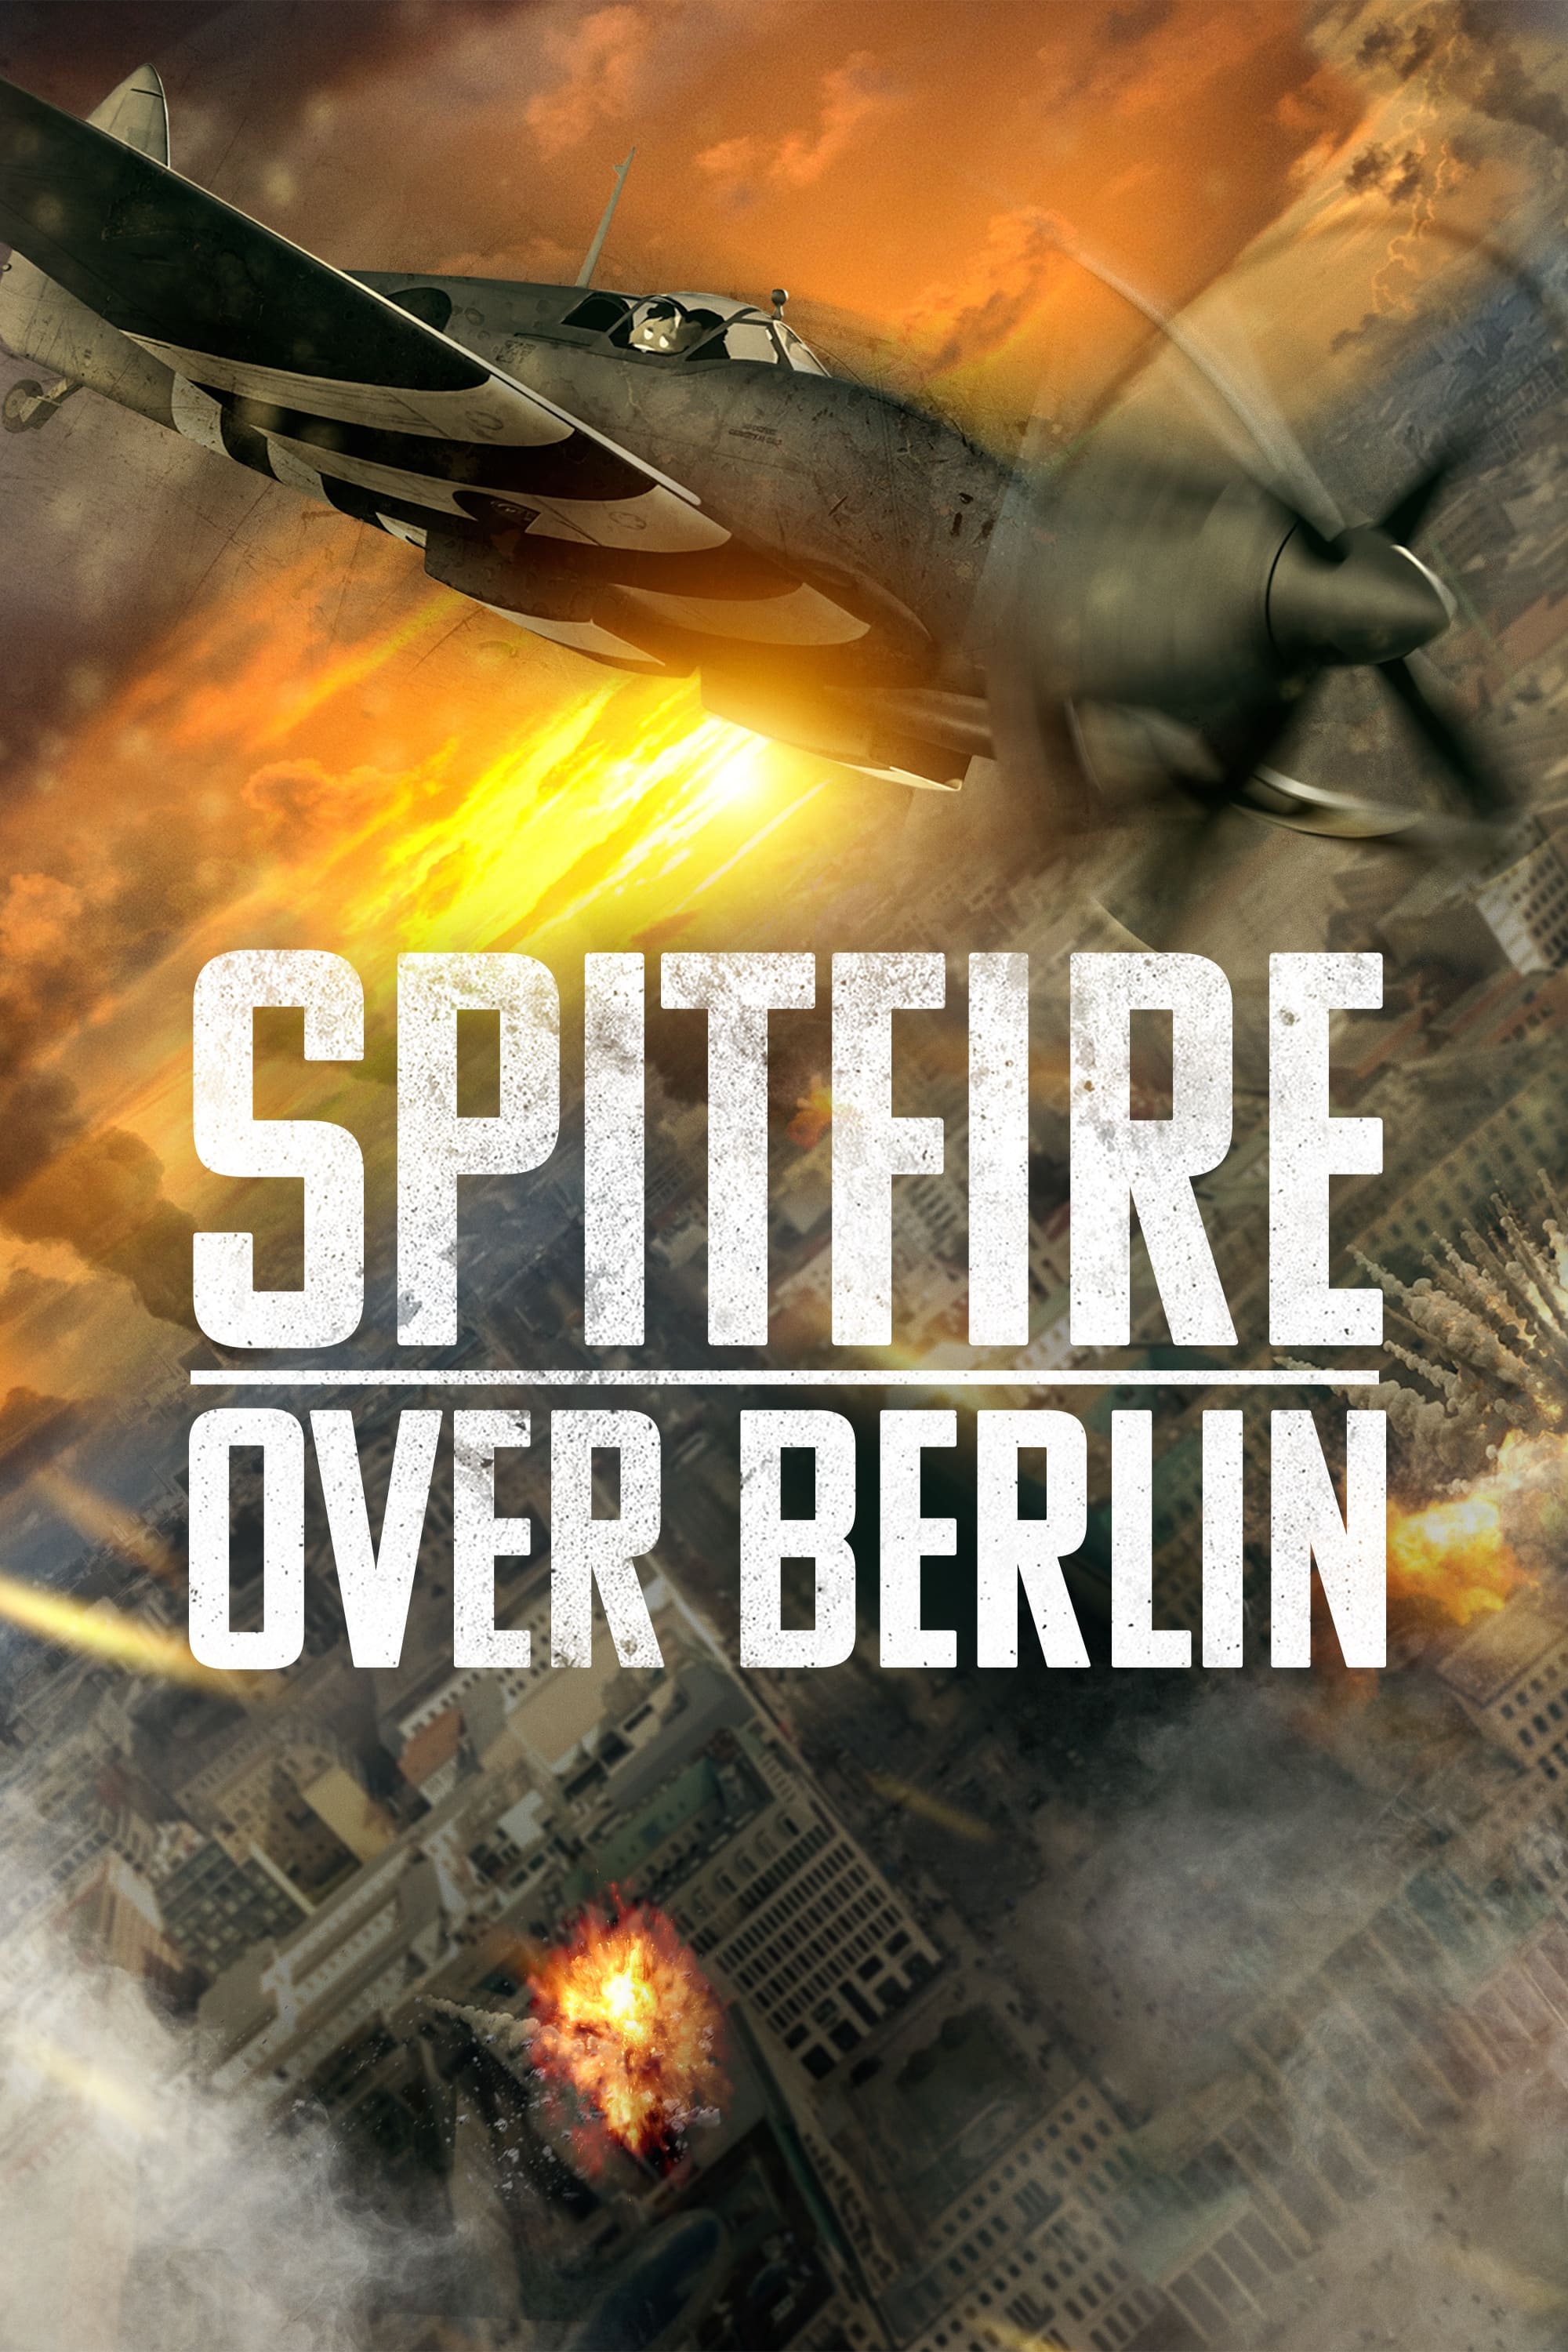 poster for Spitfire Over Berlin